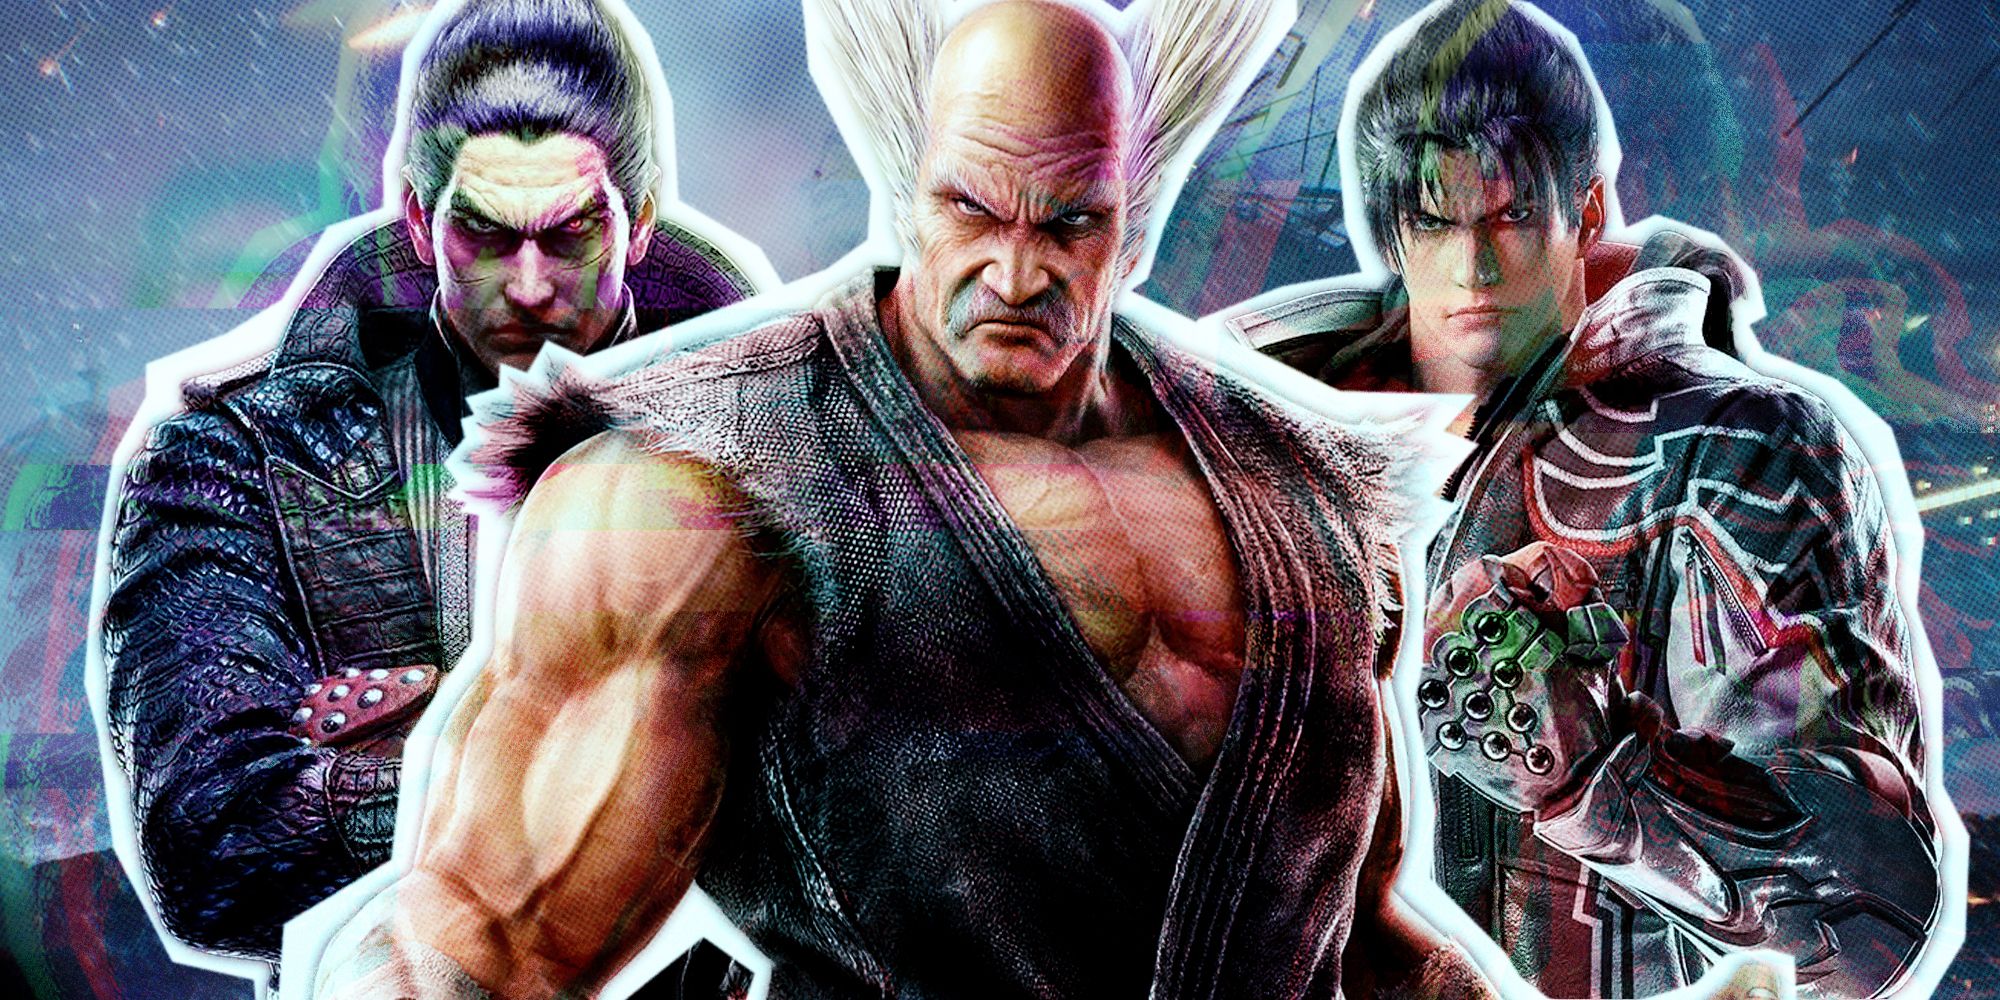 Tekken 8 interview - image showing Kazuya, Heihachi, and Jin side by side